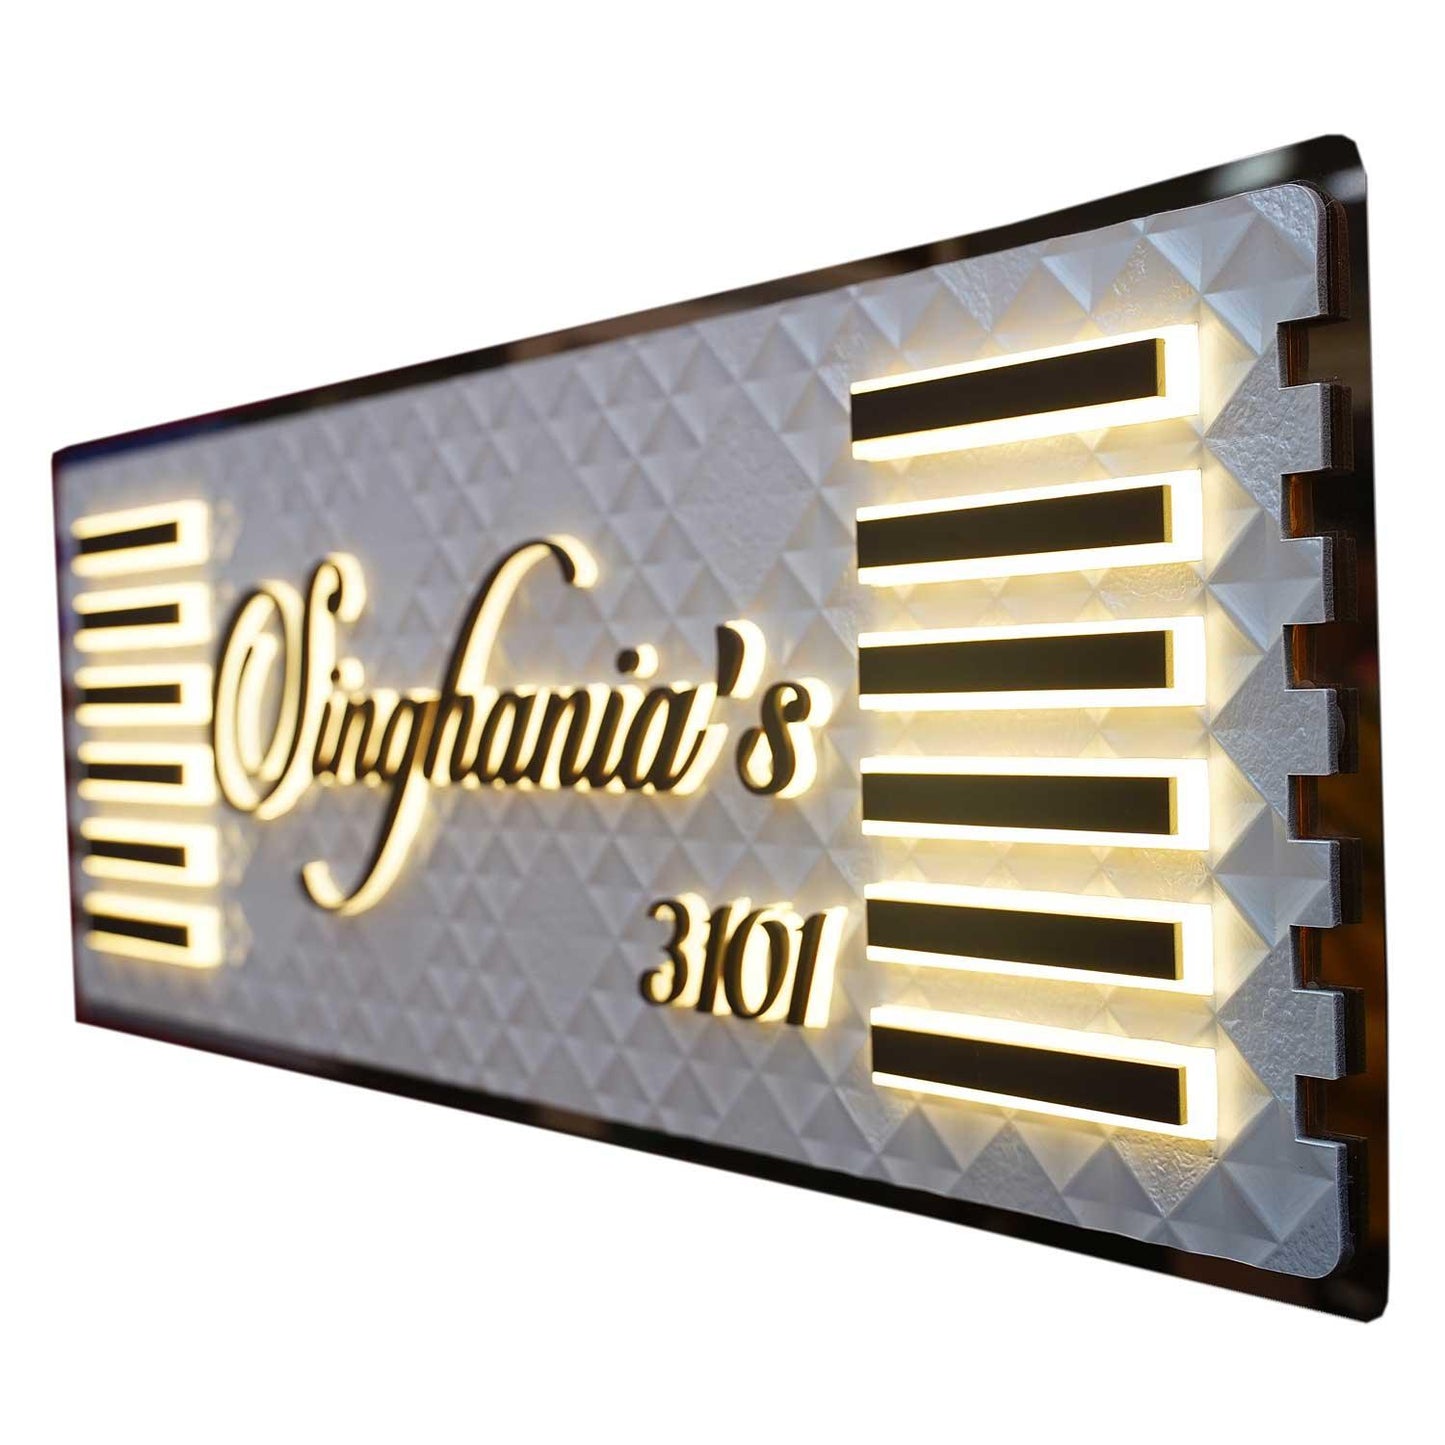 Singhania - Decorative LED Name Plate - Housenama